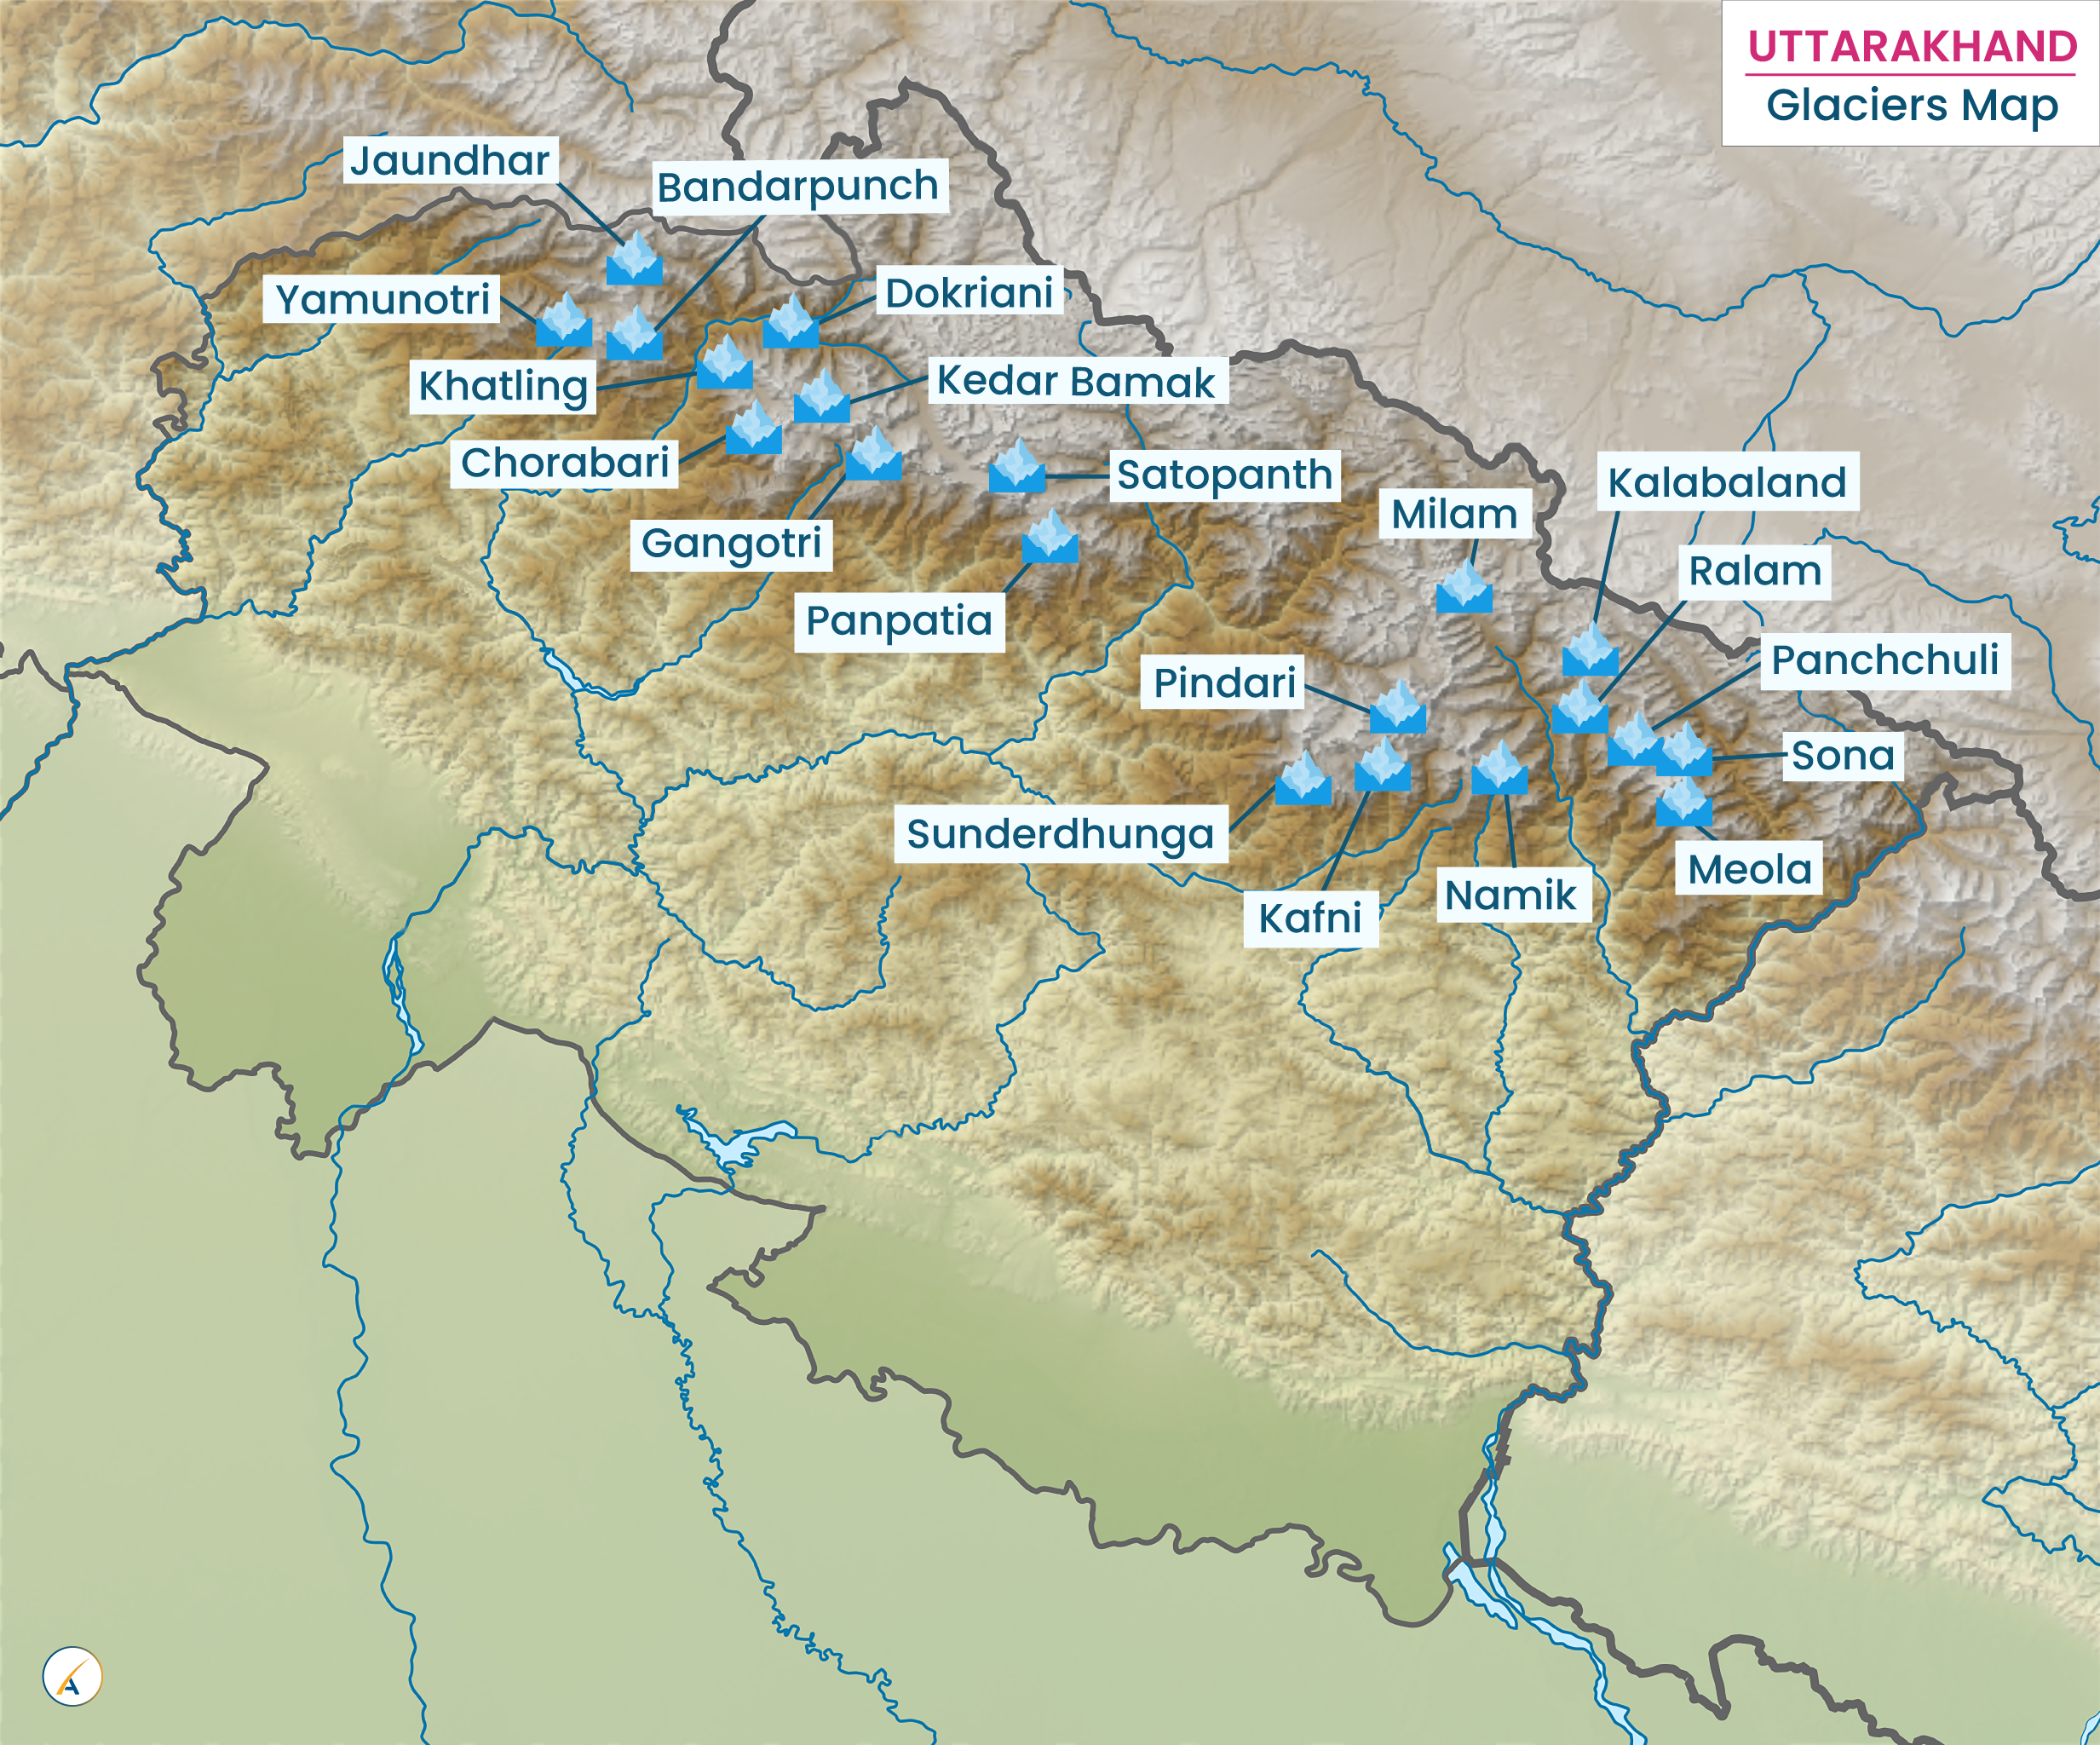 Uttarakhand Glacier Map